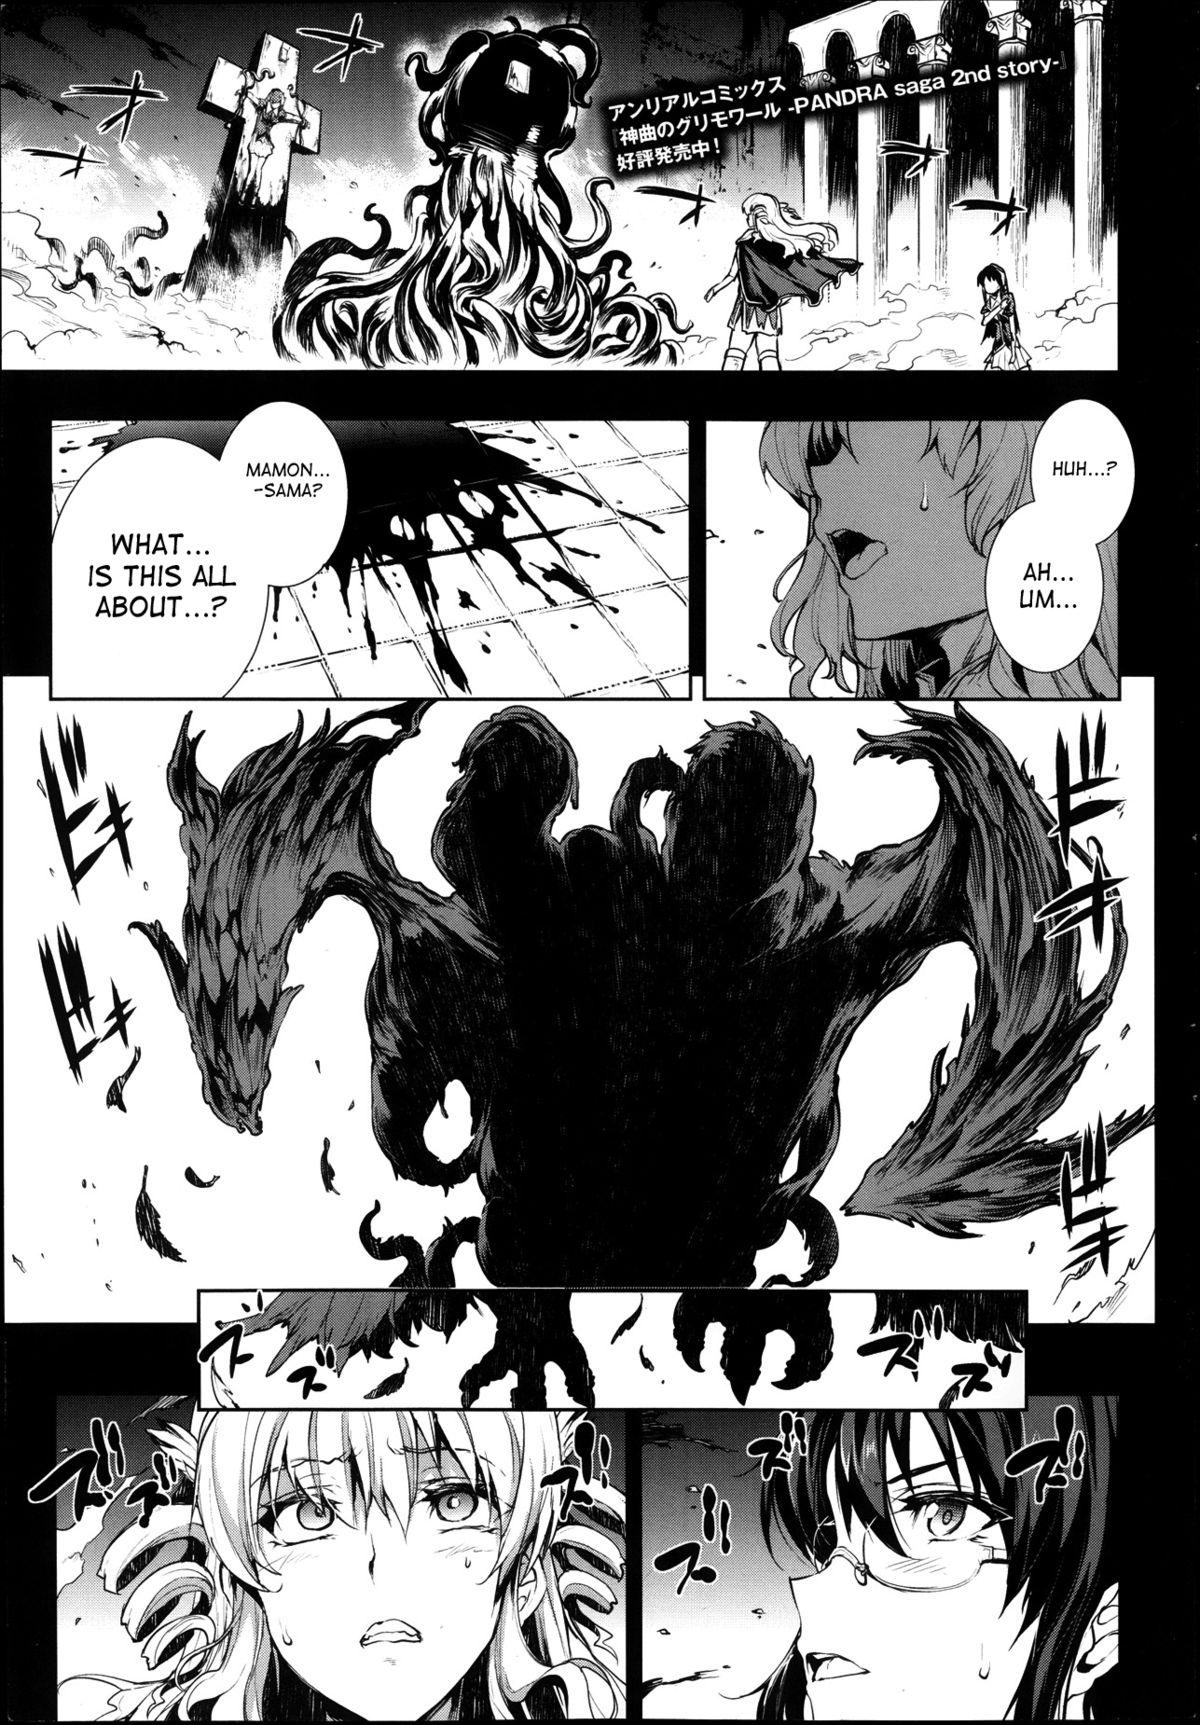 [Erect Sawaru] Shinkyoku no Grimoire -PANDRA saga 2nd story- Ch. 1-15 + Side Story x 3 [English] [SaHa] 248